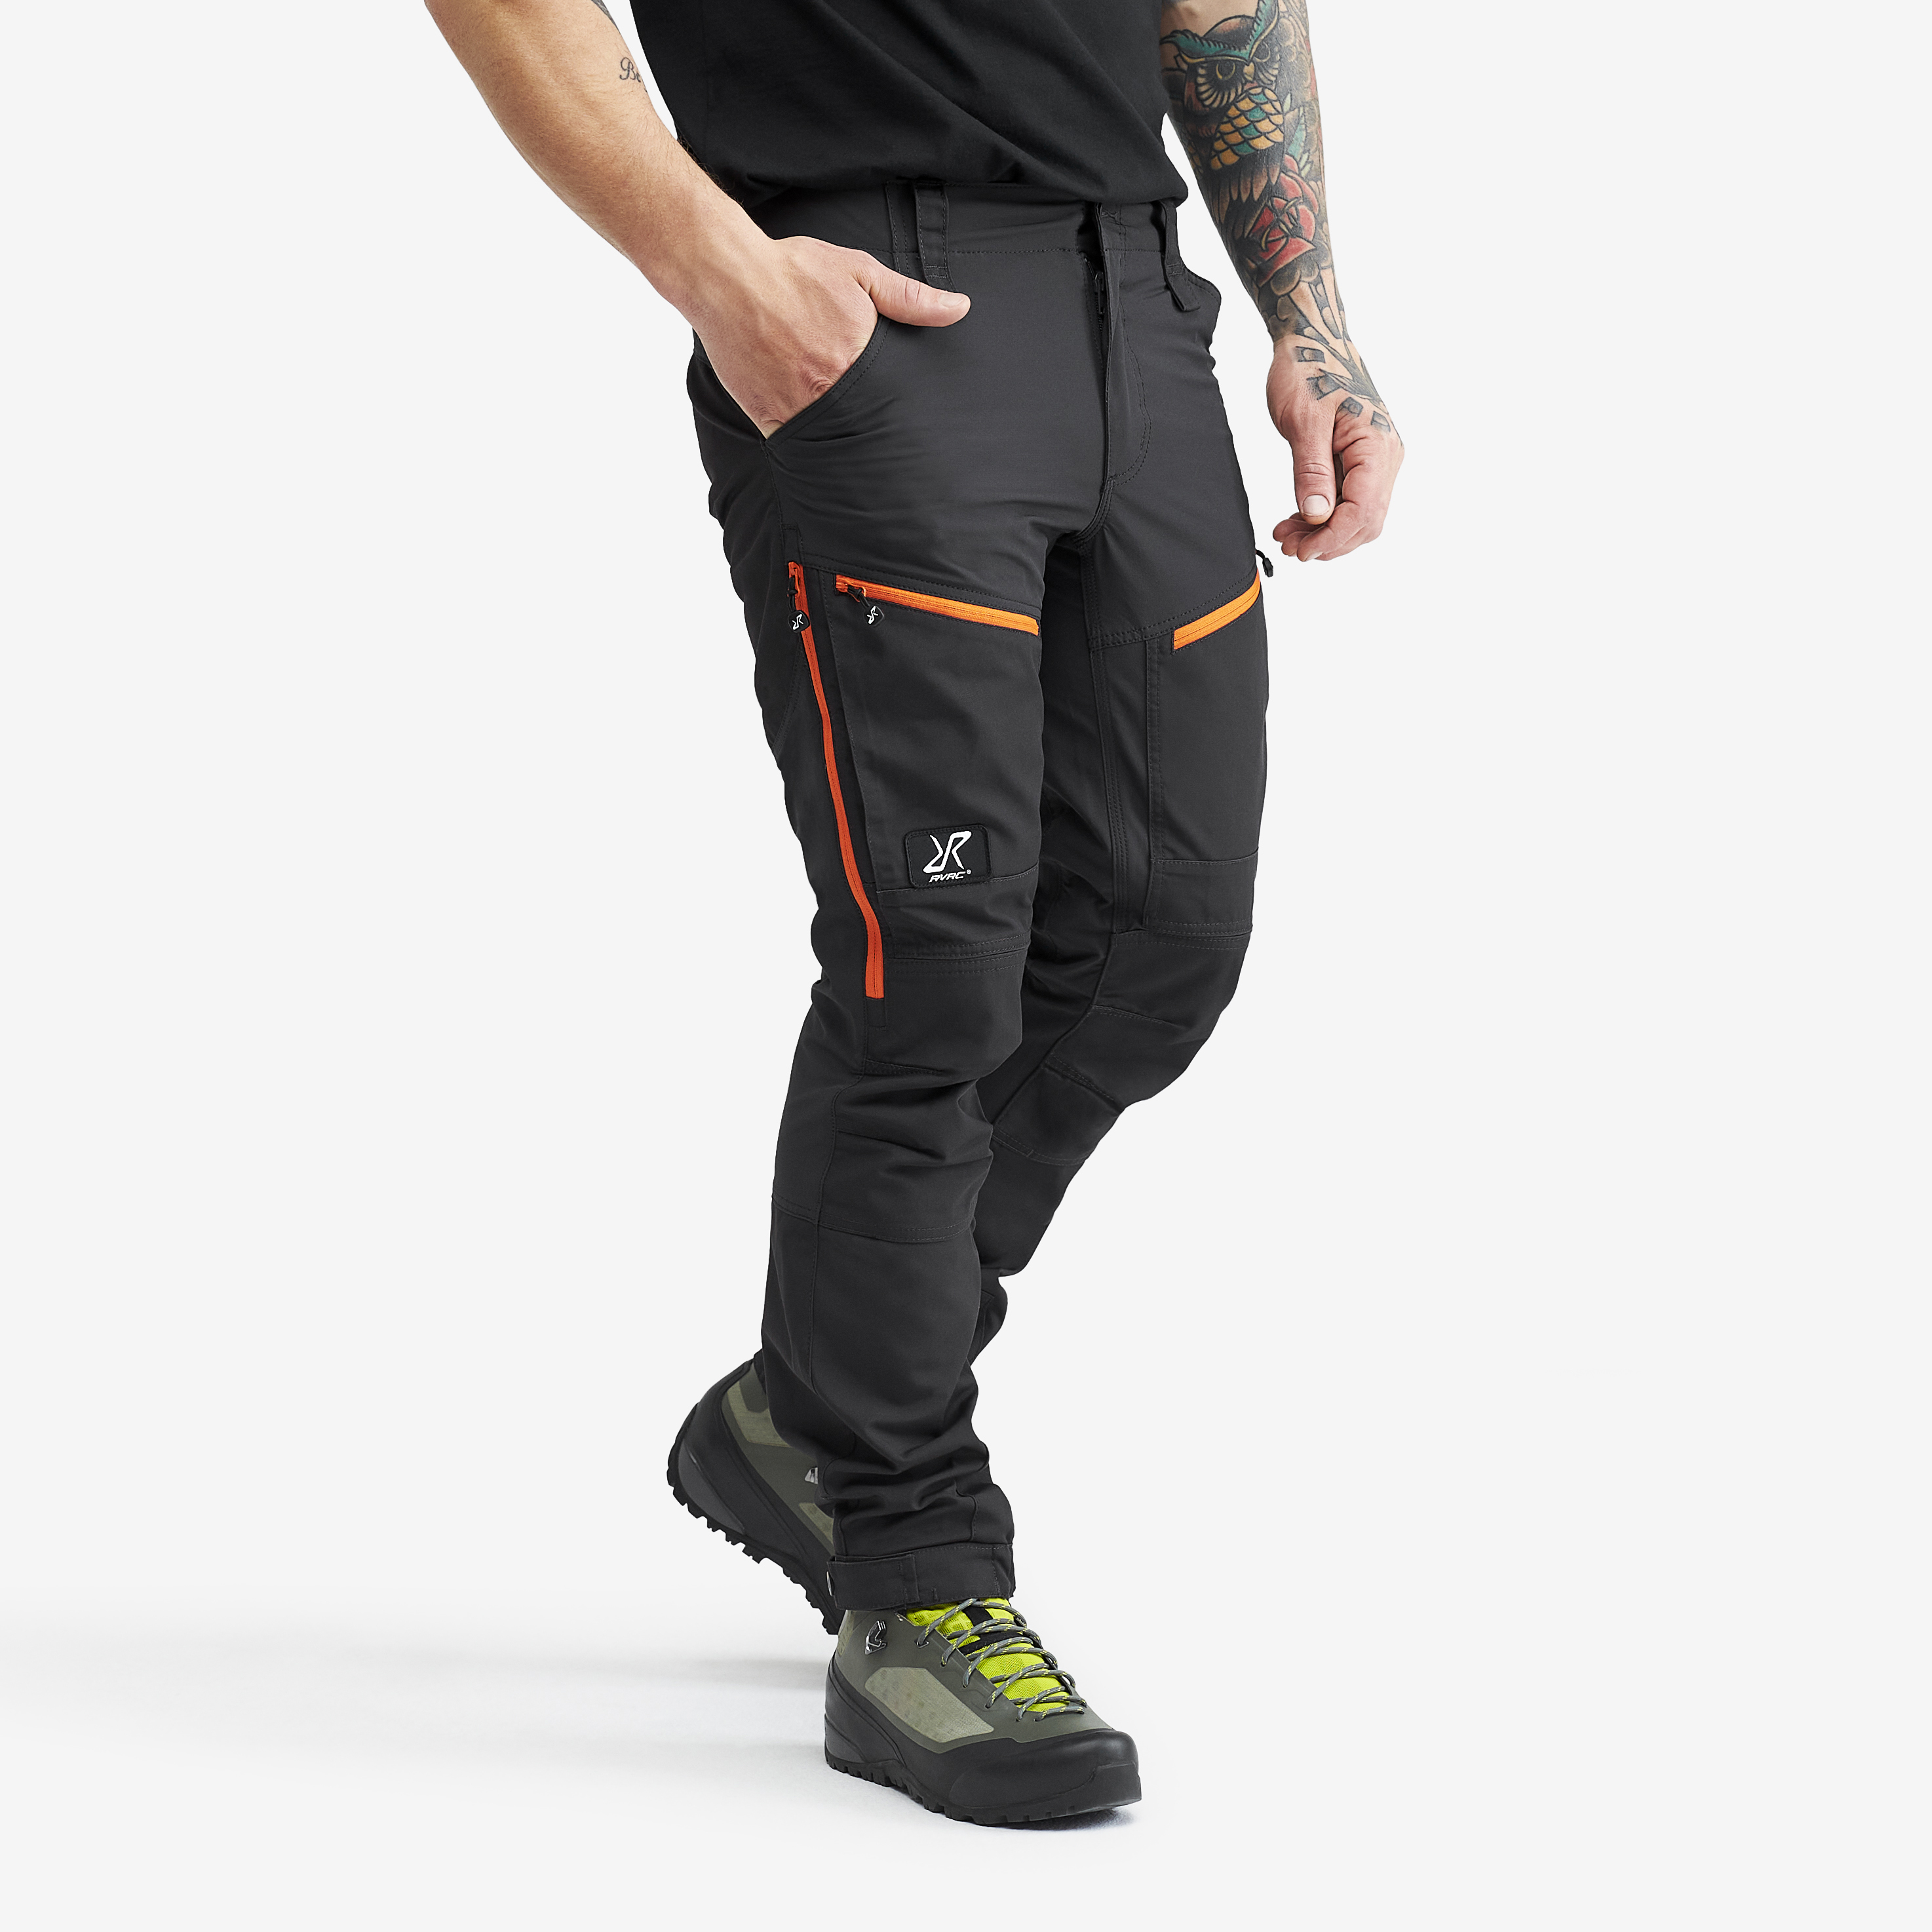 RVRC GP Pro Short Pants Grey/Orange Hombres